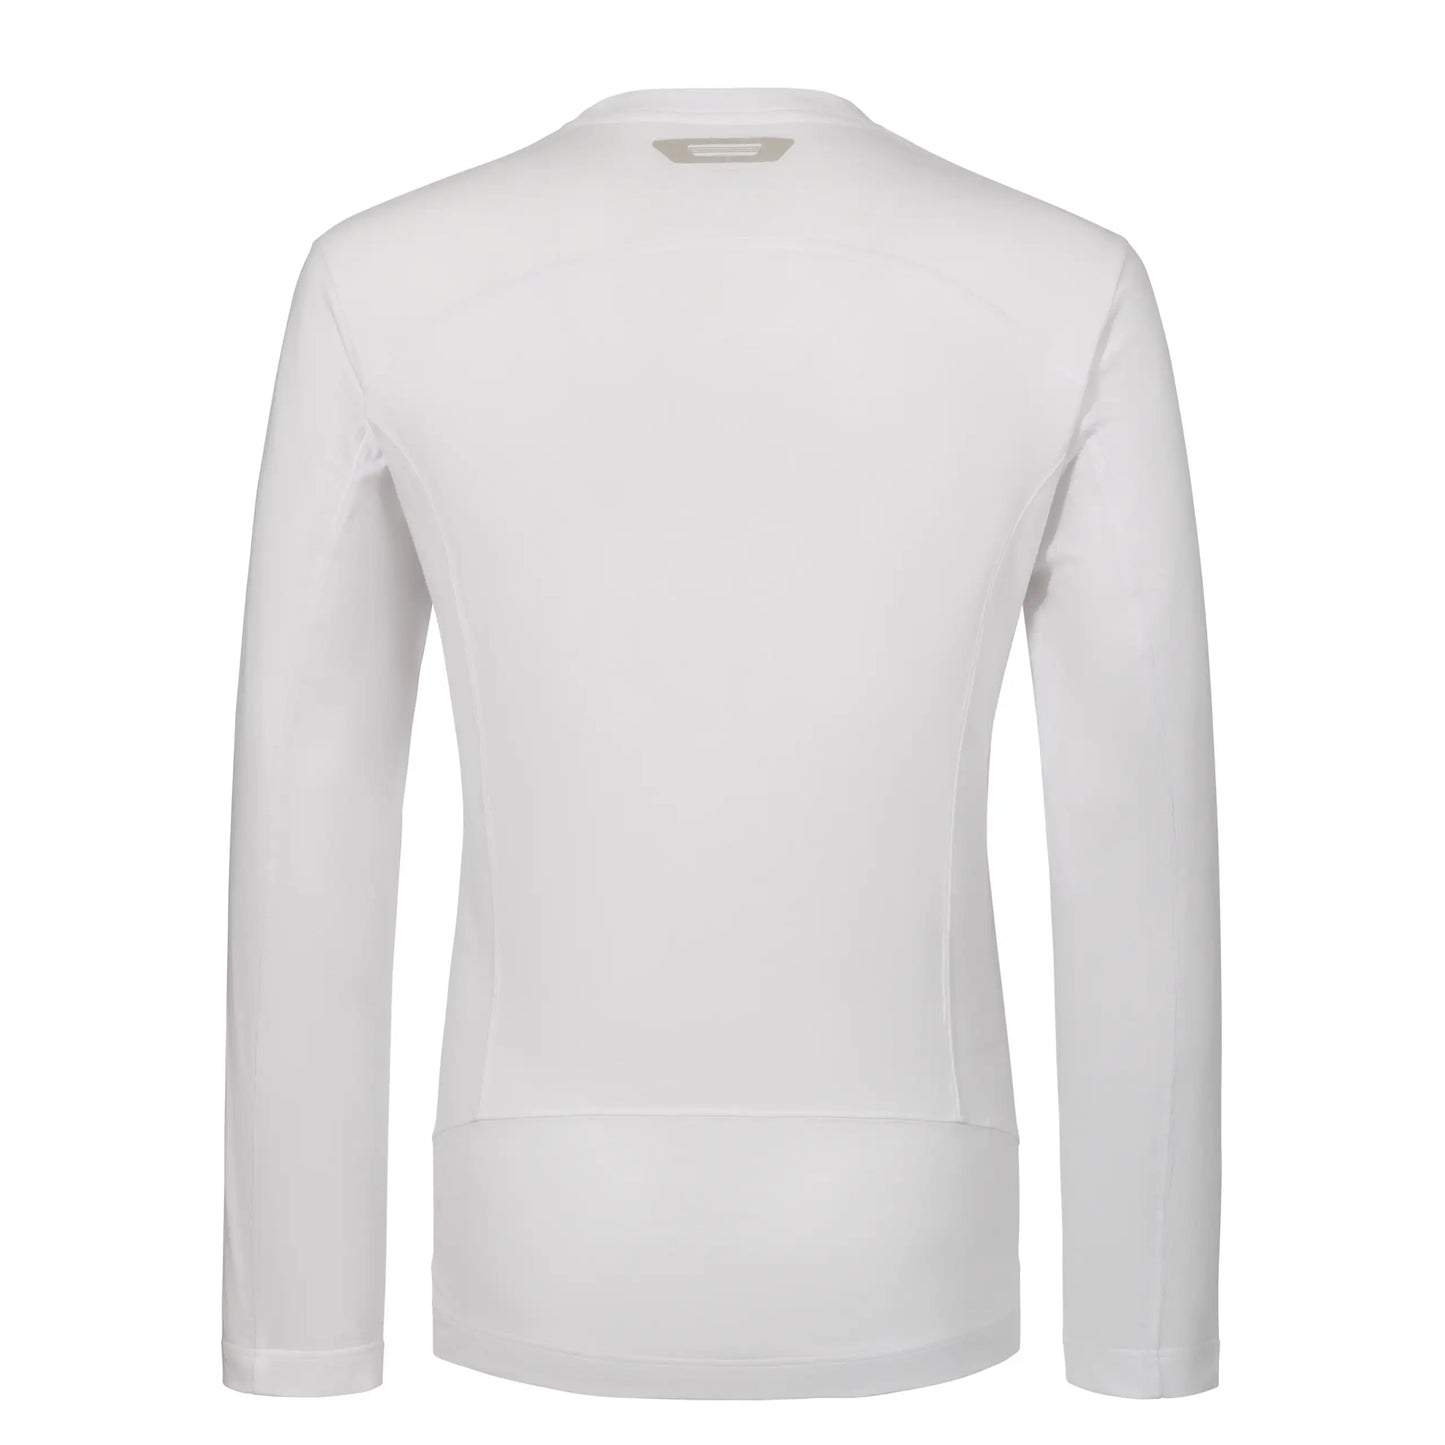 VMG 2.0 Long Sleeve T-Shirt in Warm White